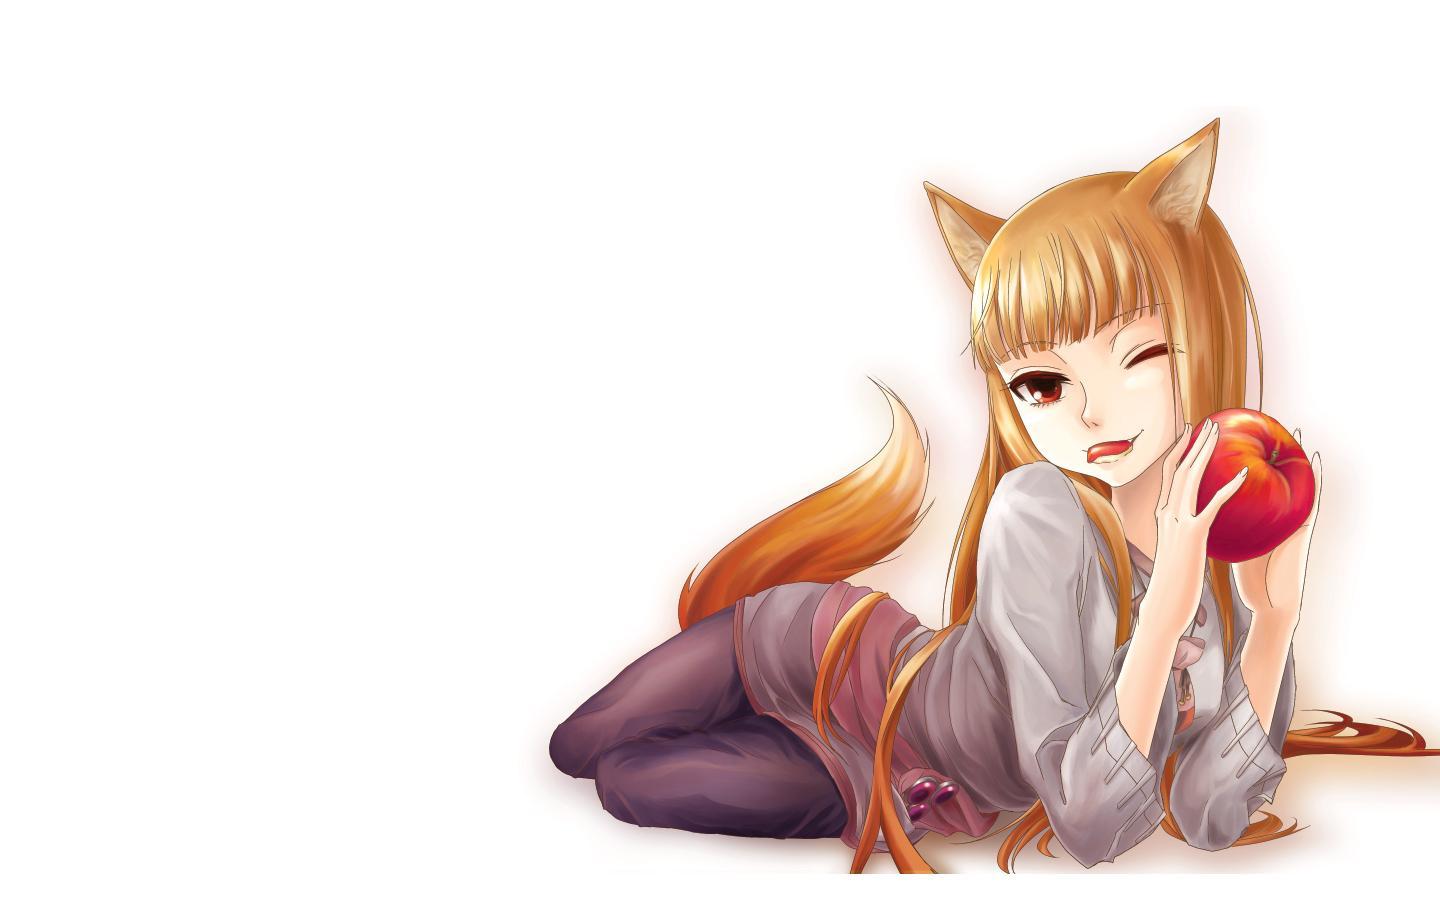 Anime Wolf Girl Wallpapers - Top Free Anime Wolf Girl ...